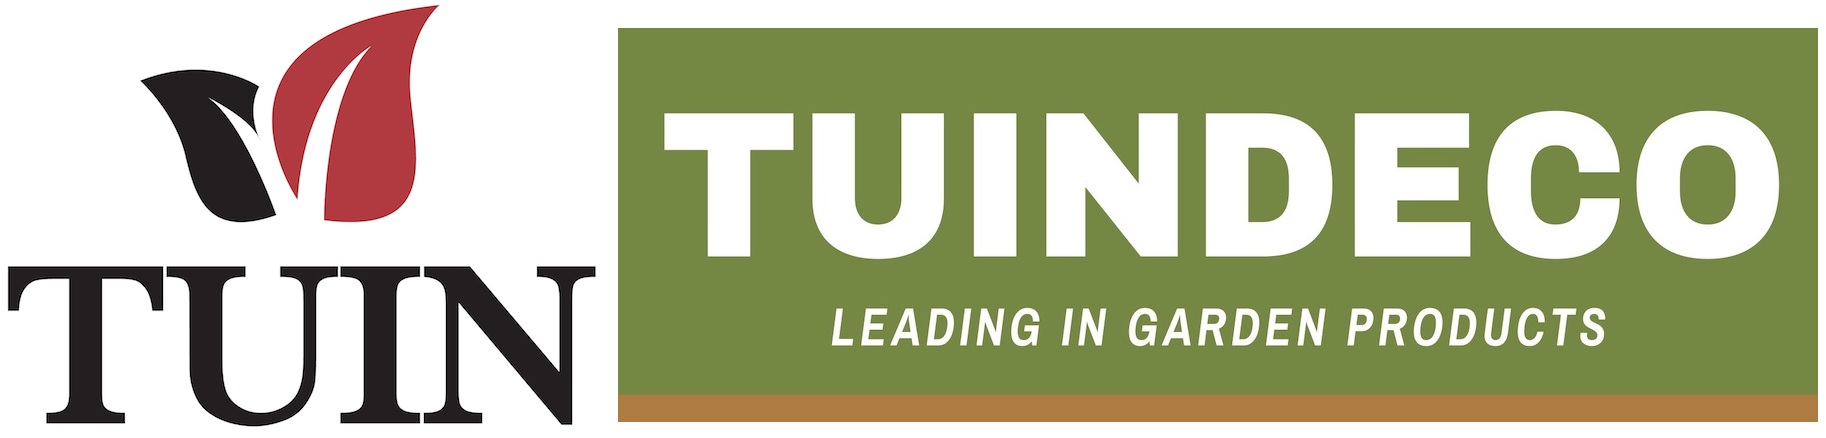 Tuindeco Logo